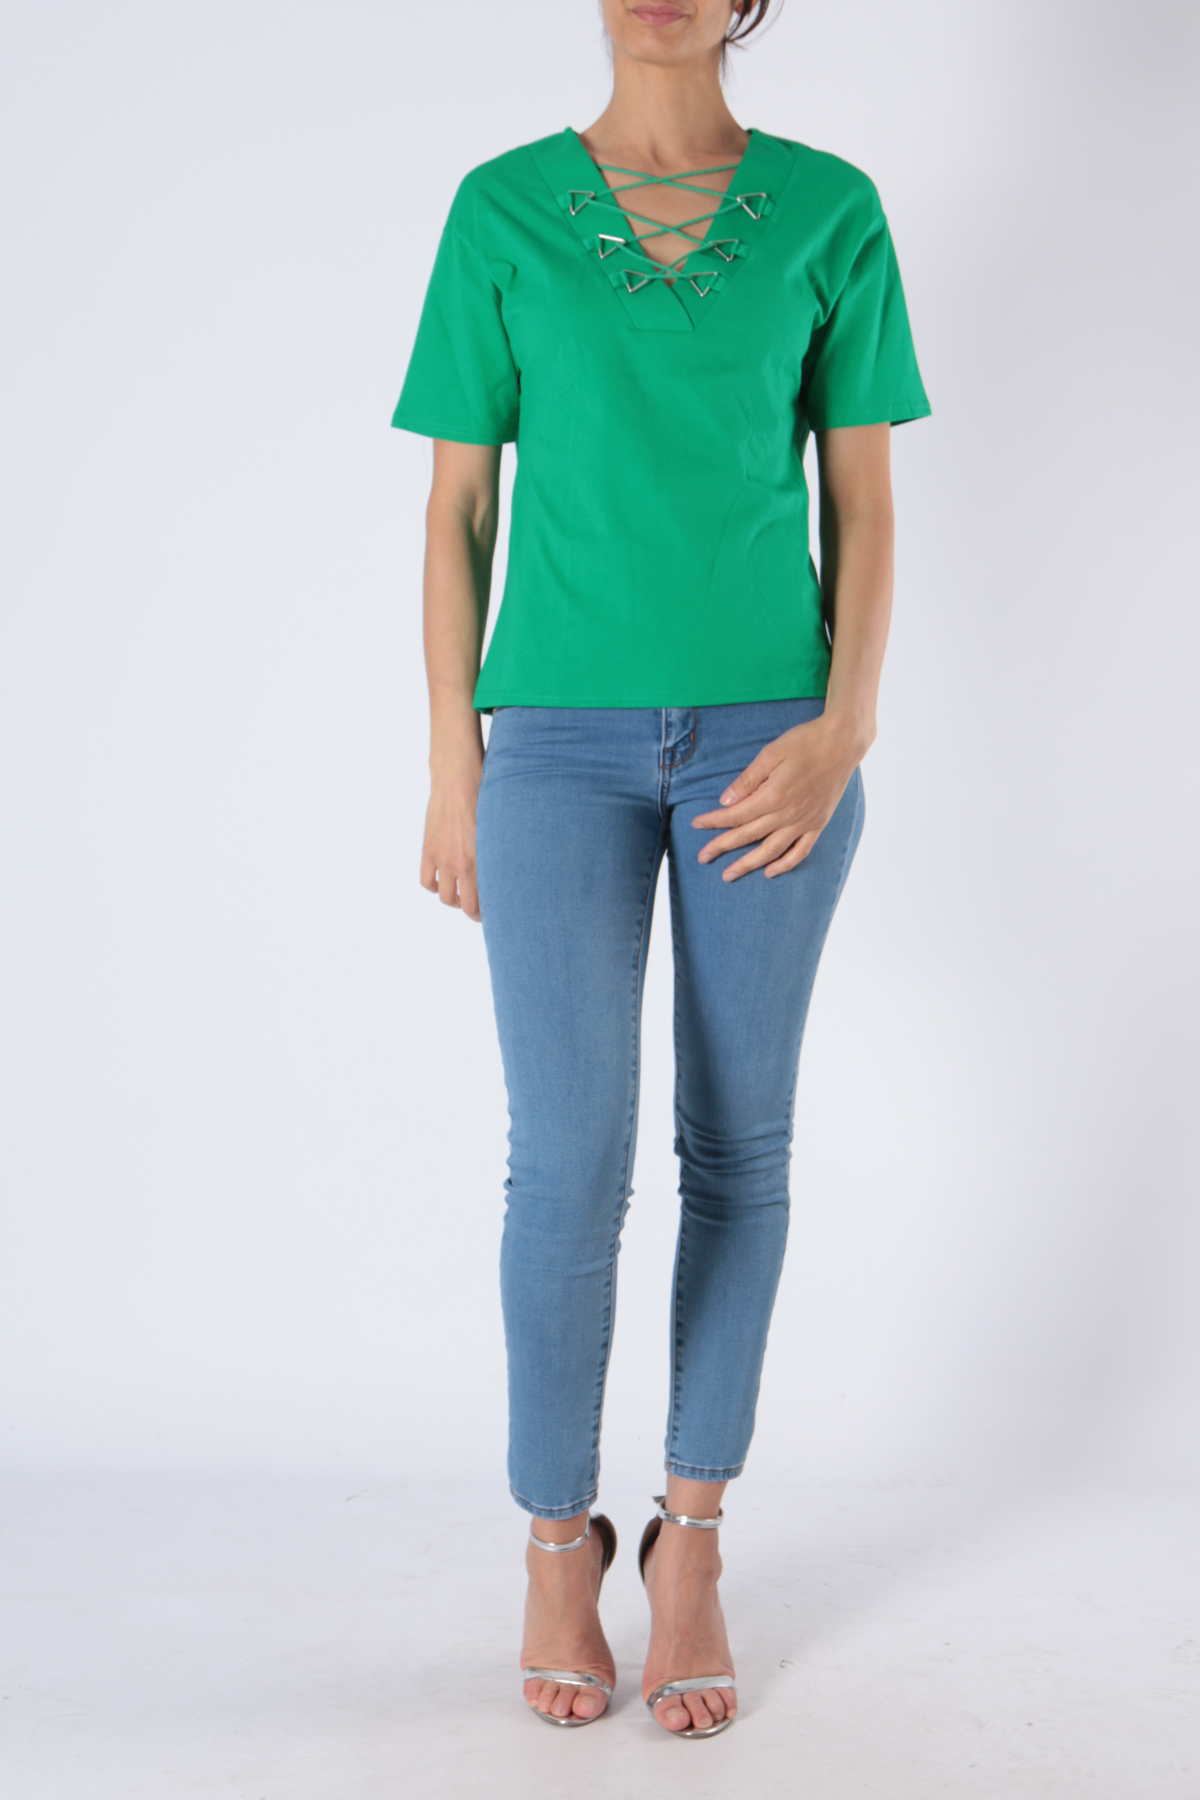 Camisetas Mujer Green Luc-ce 3292 #c Efashion Paris